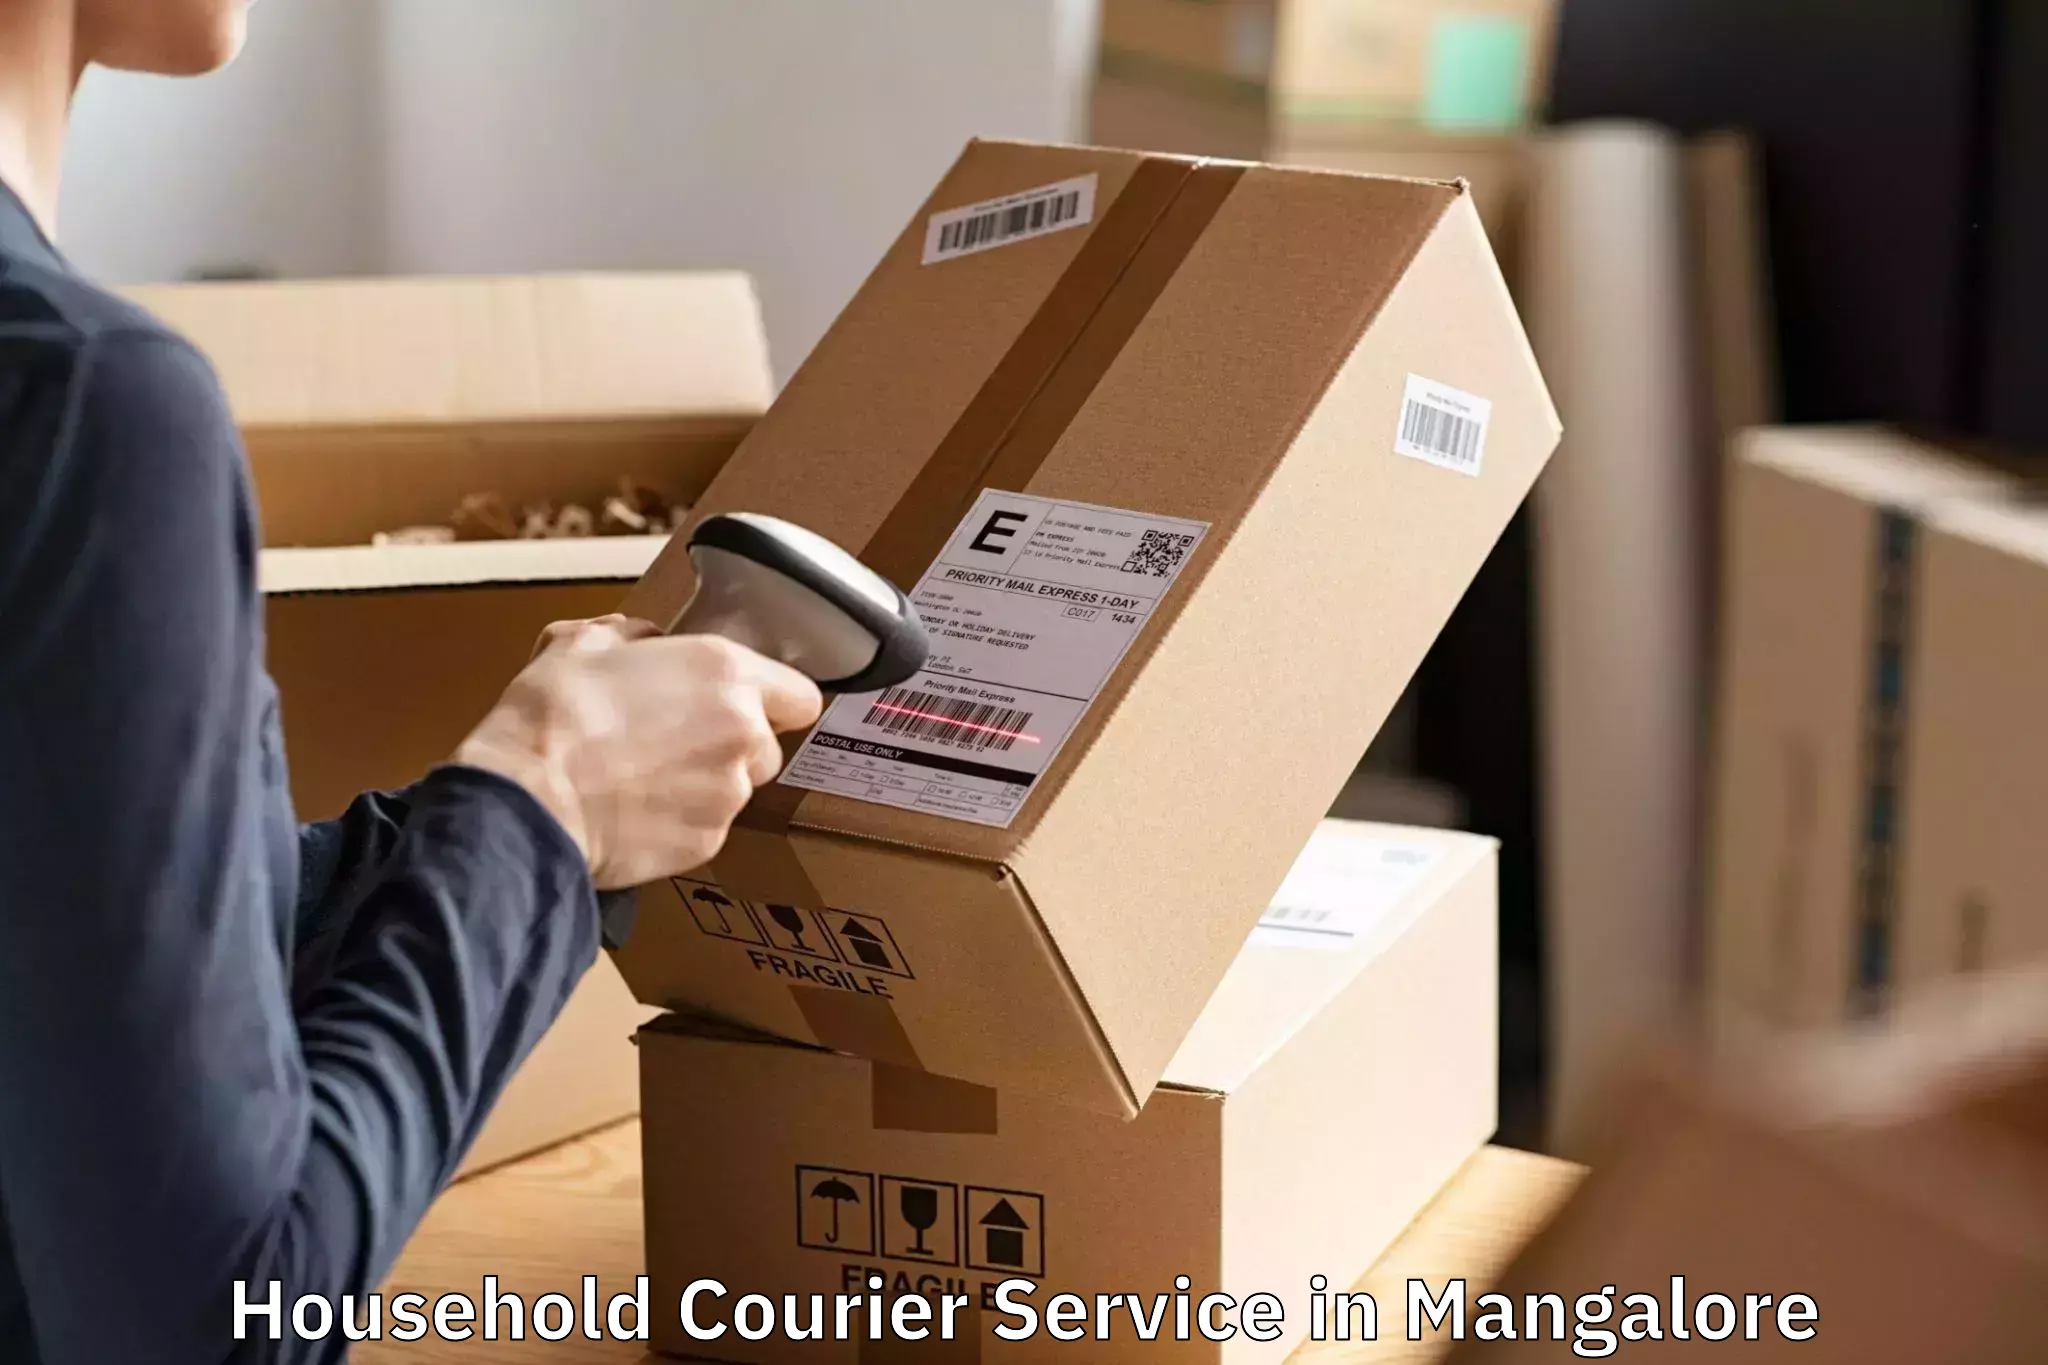 Easy Household Courier Service Booking in Mangalore, Karnataka (KA)